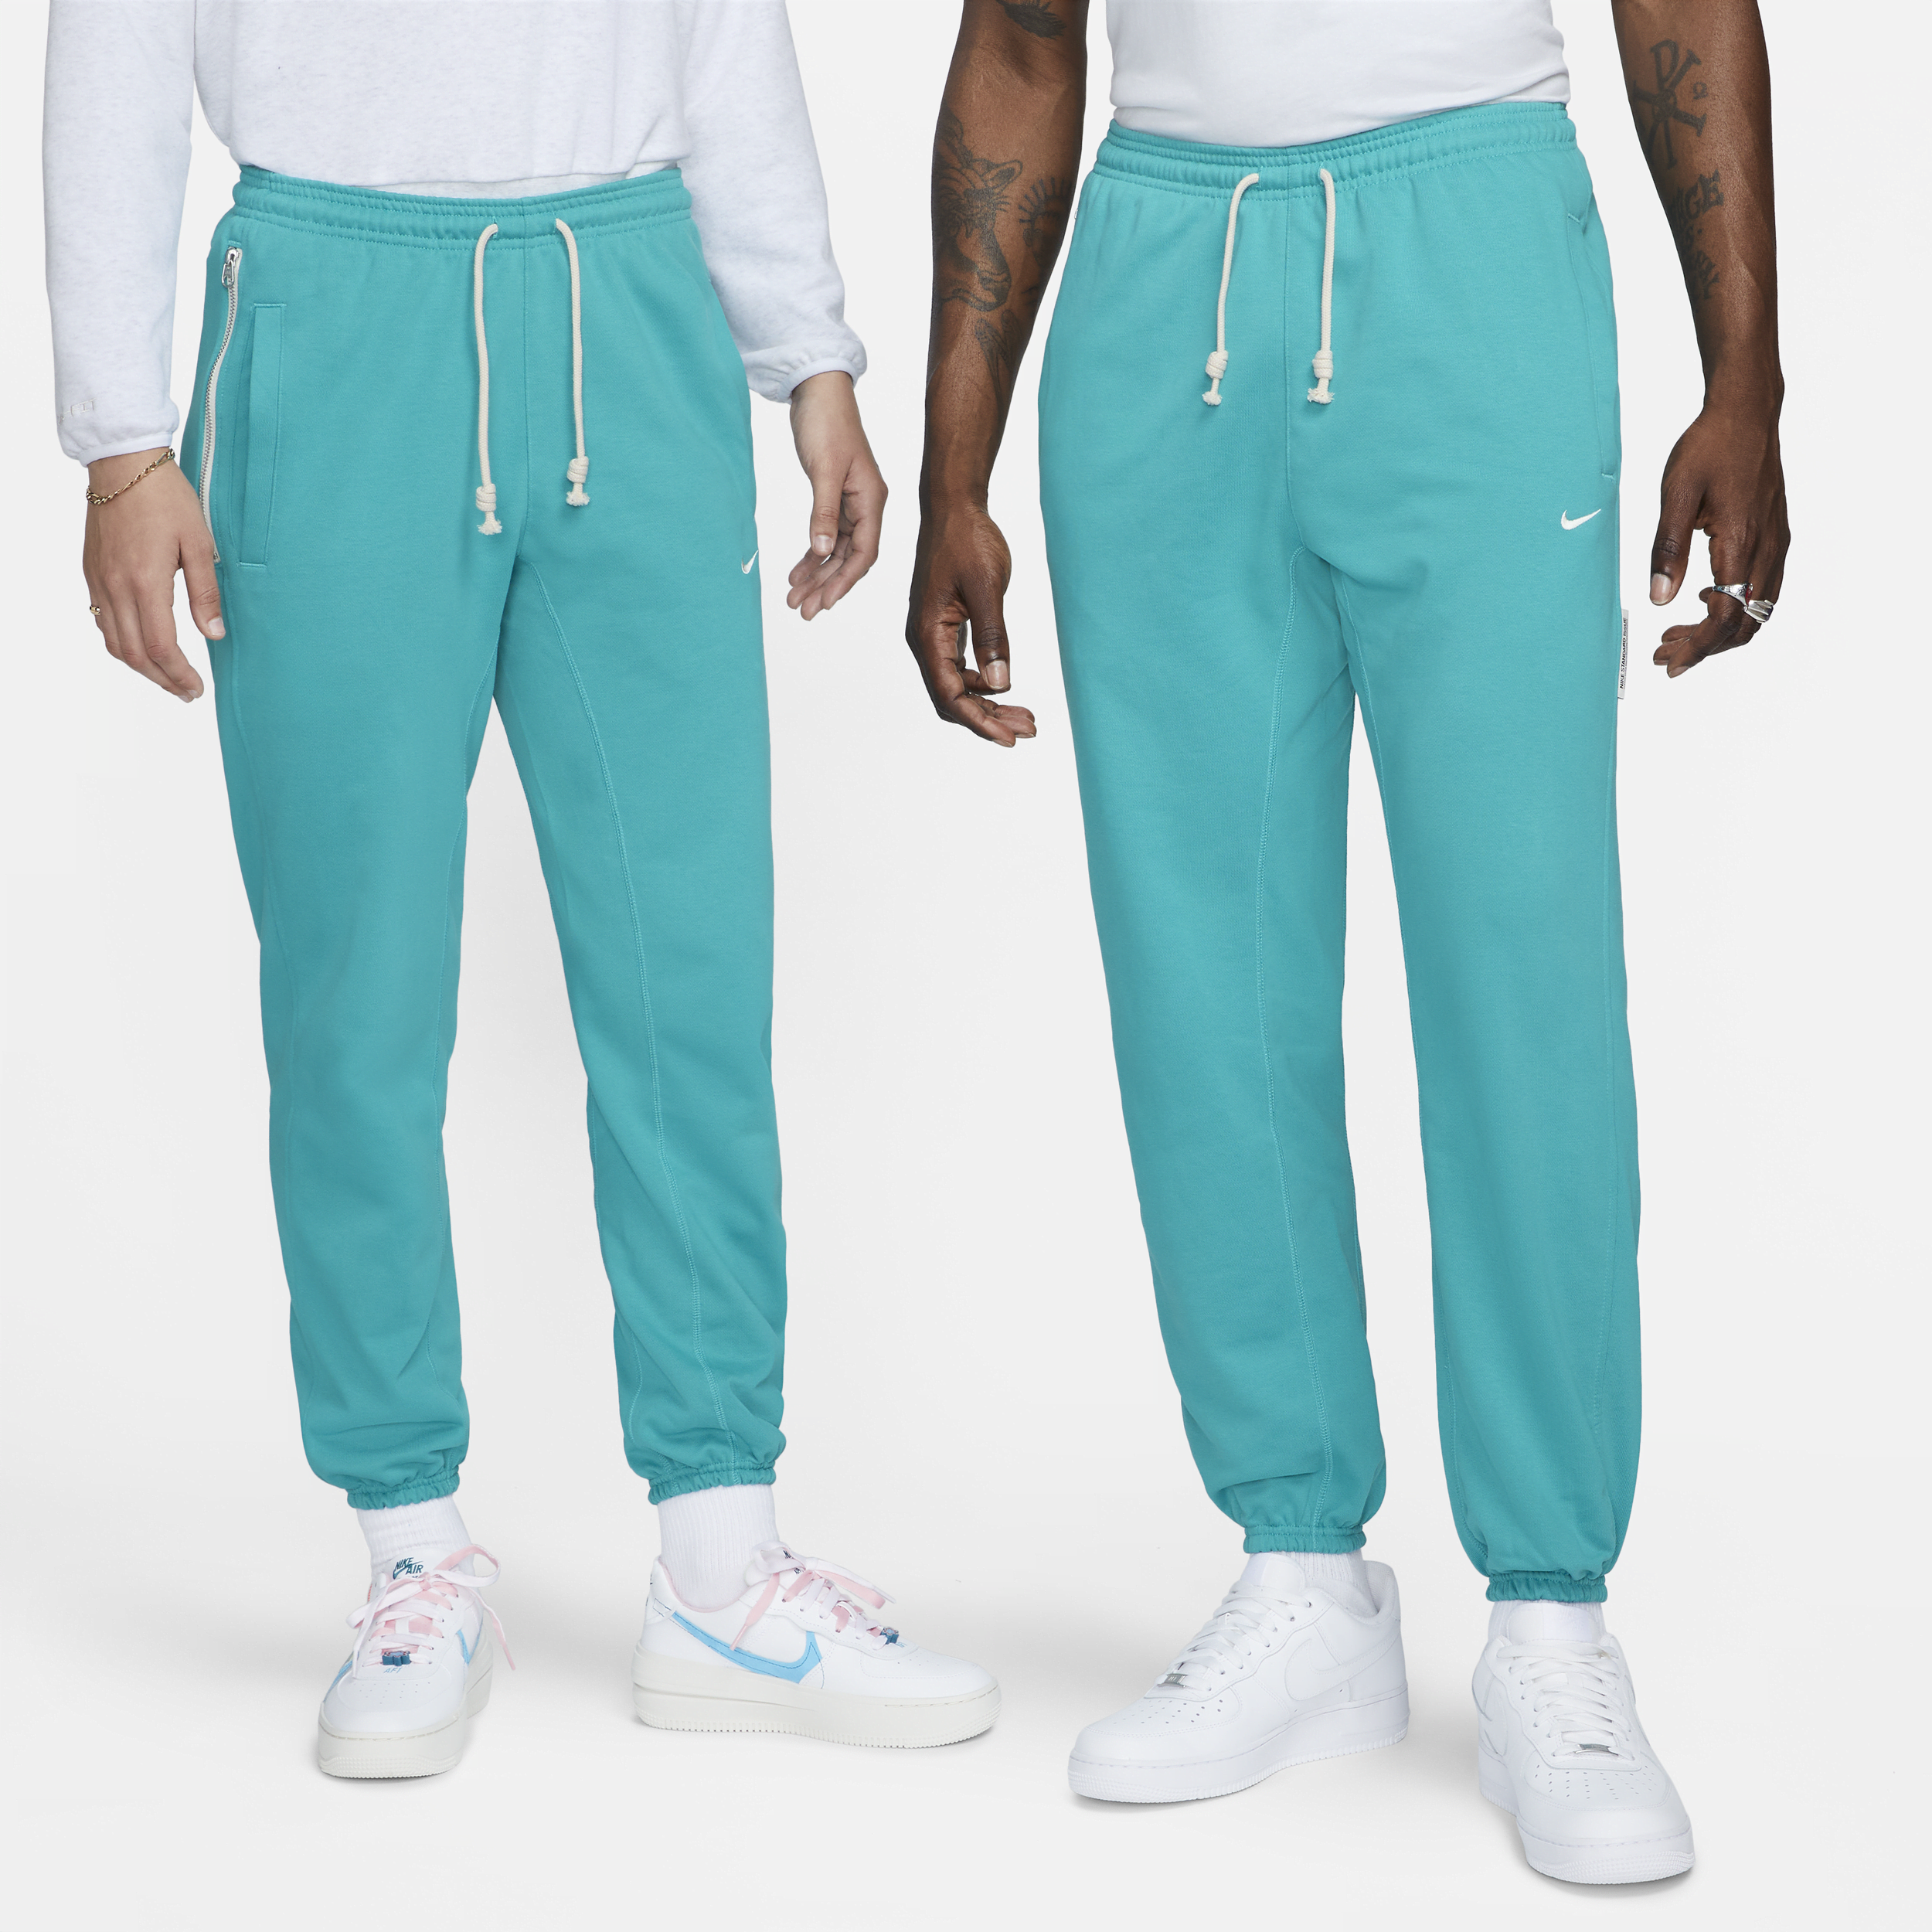 Nike Men's Standard Issue Dri-fit Basketball Pants In Green